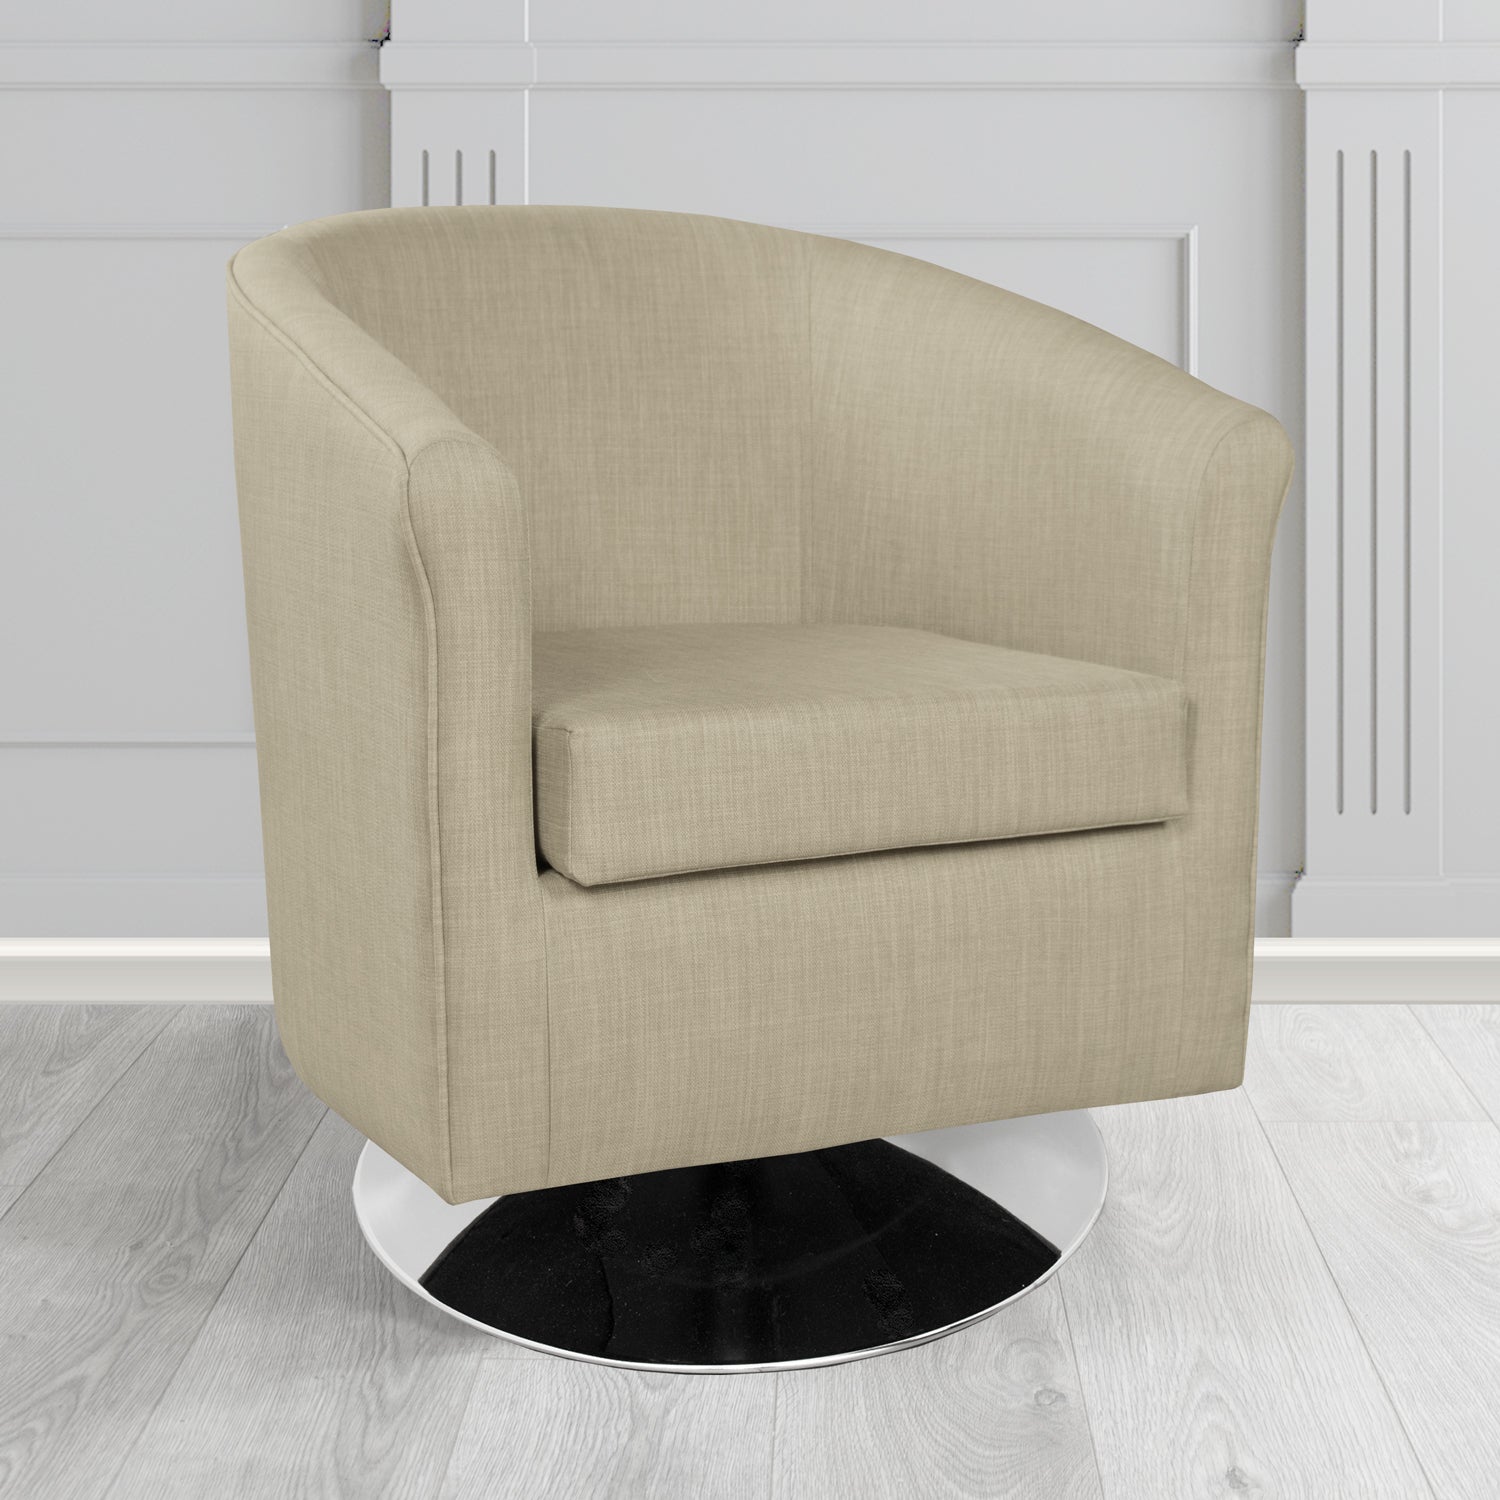 Tuscany Charles Fudge Plain Linen Fabric Swivel Tub Chair - The Tub Chair Shop